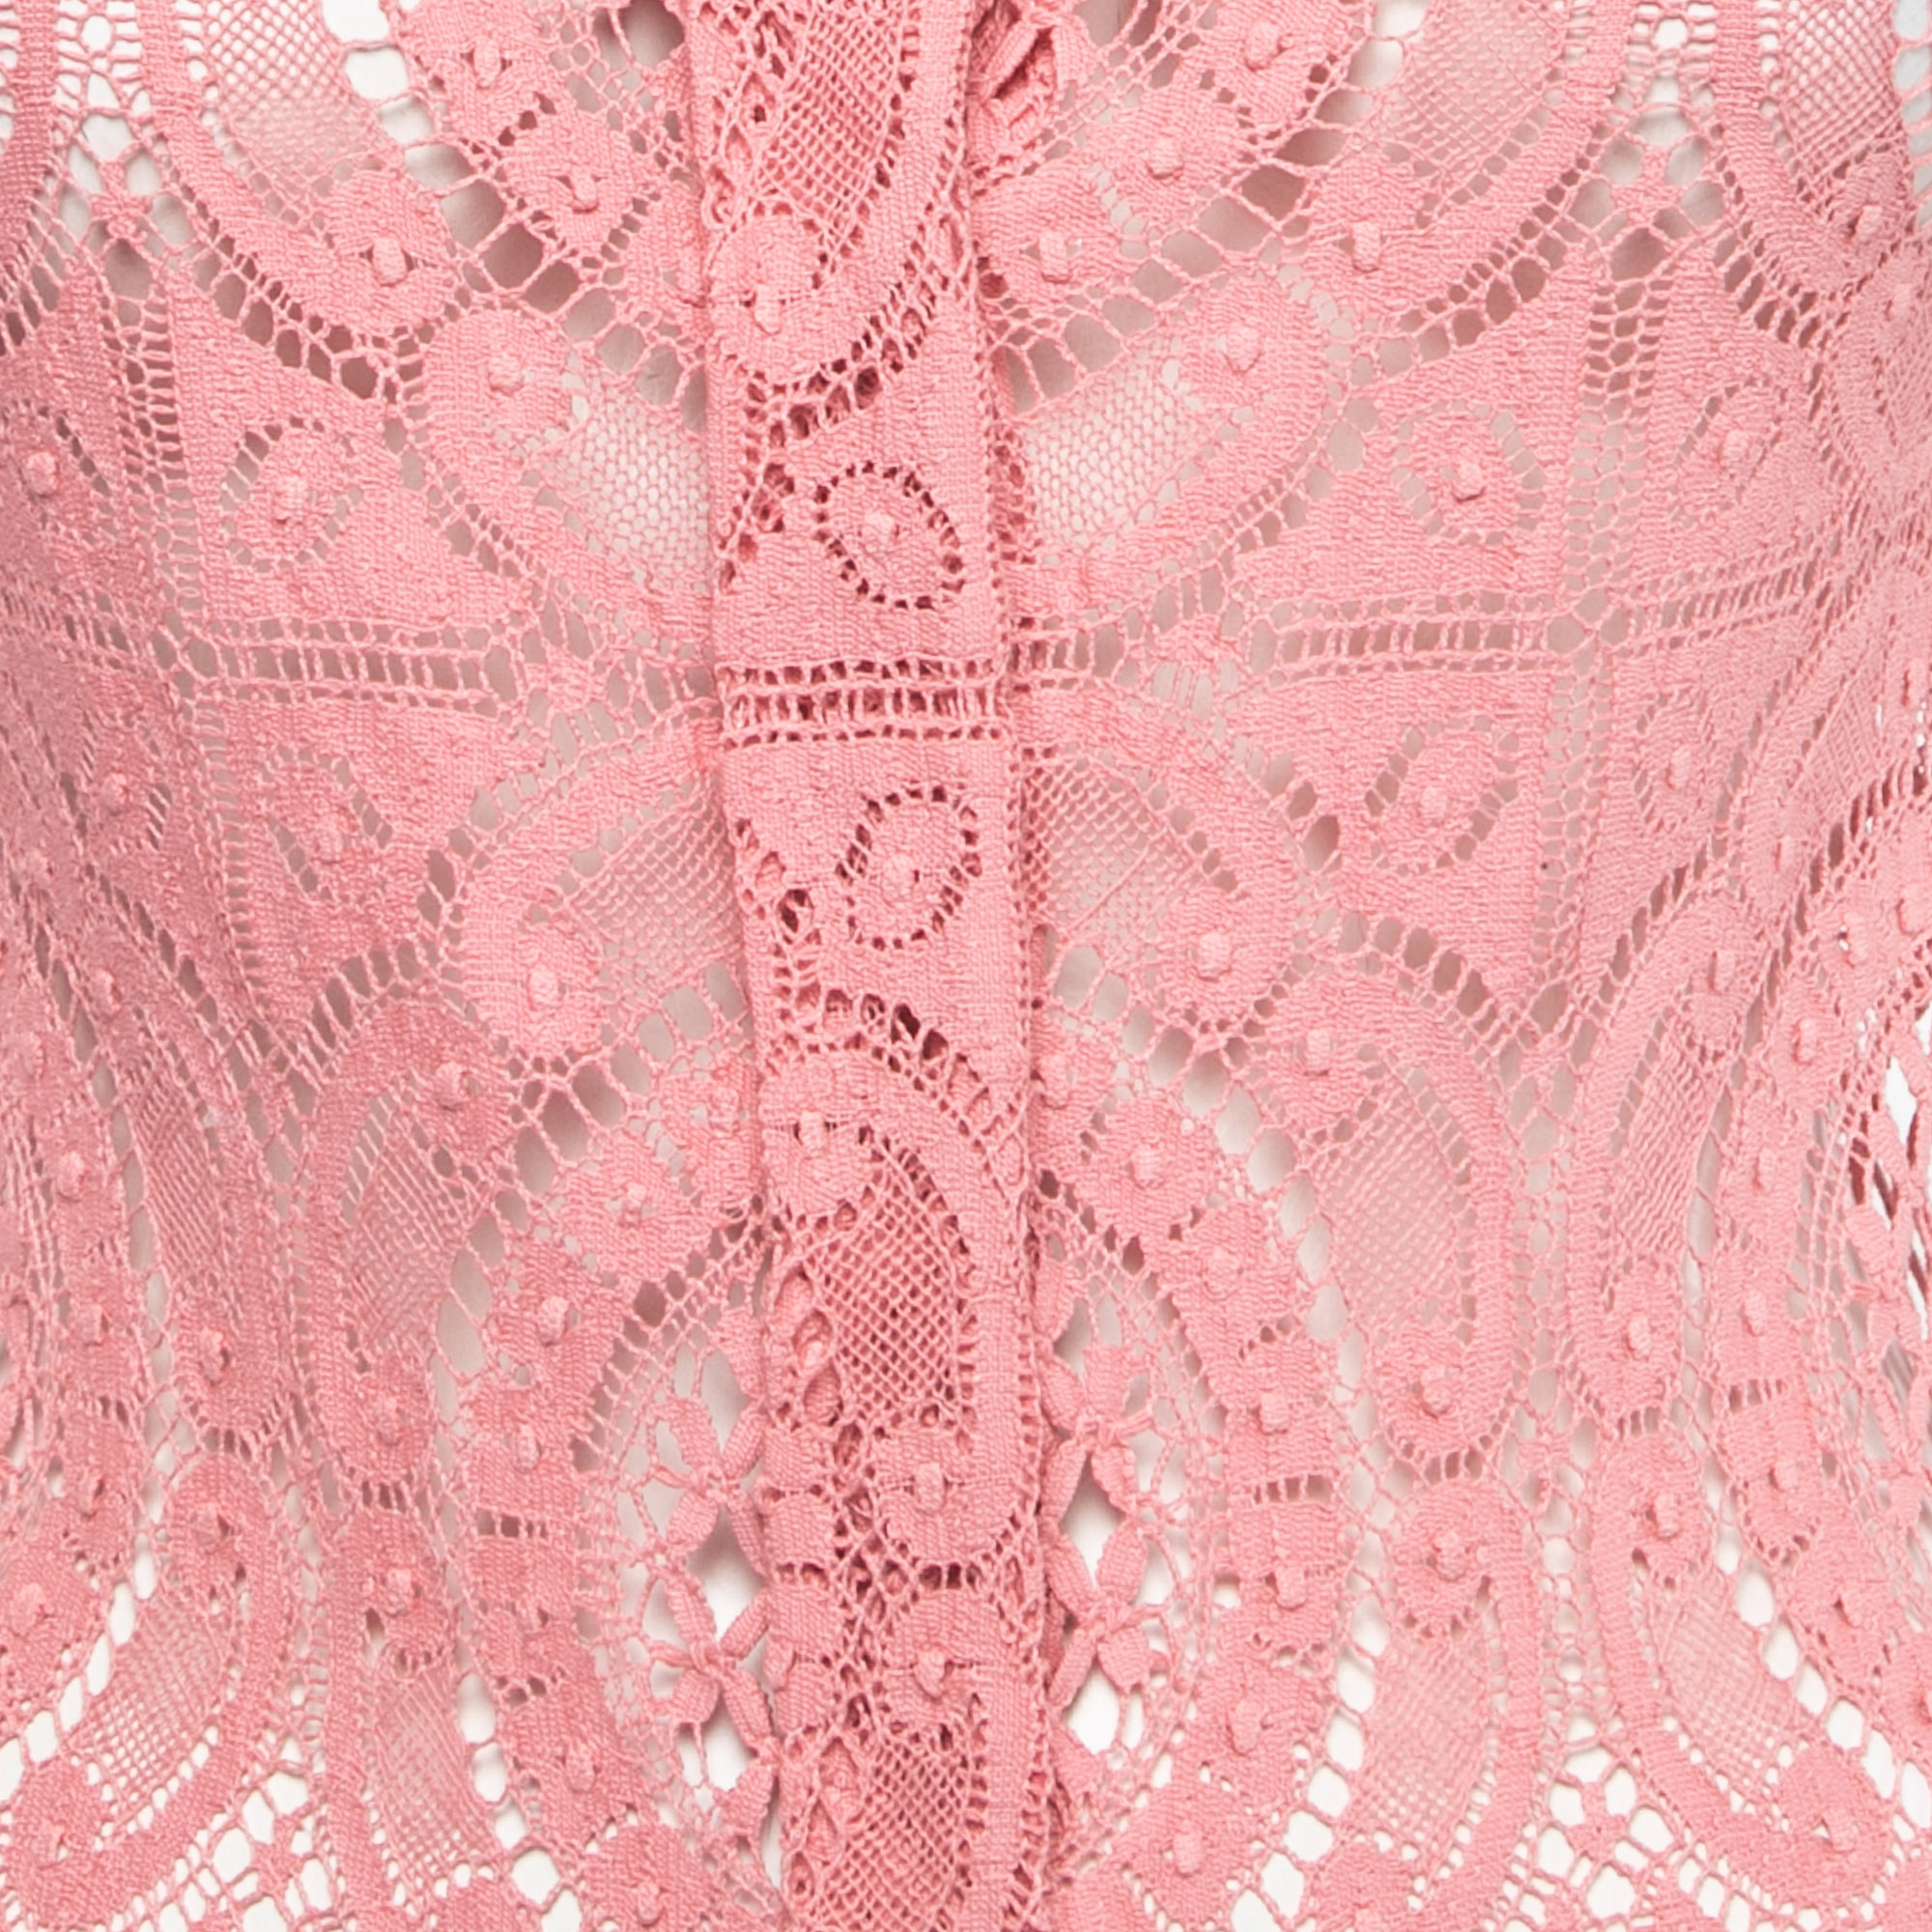 Burberry Prorsum Pink Lace Short Sleeve Shirt S